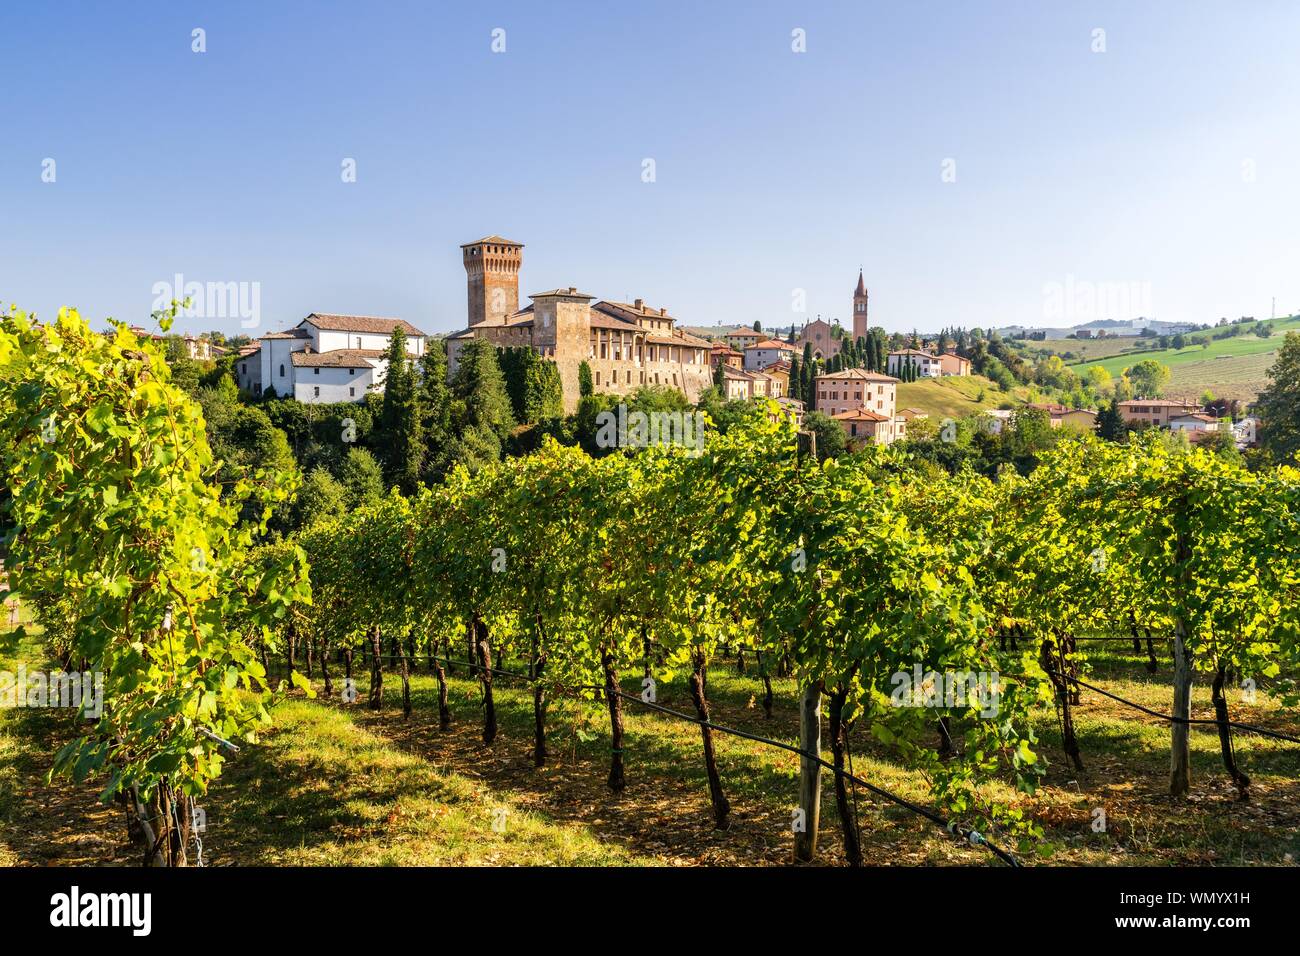 Weinberge vor dem Castello di Levizzano Rangone, levizzano Rangone, Emilia-Romagna, Italien Stockfoto